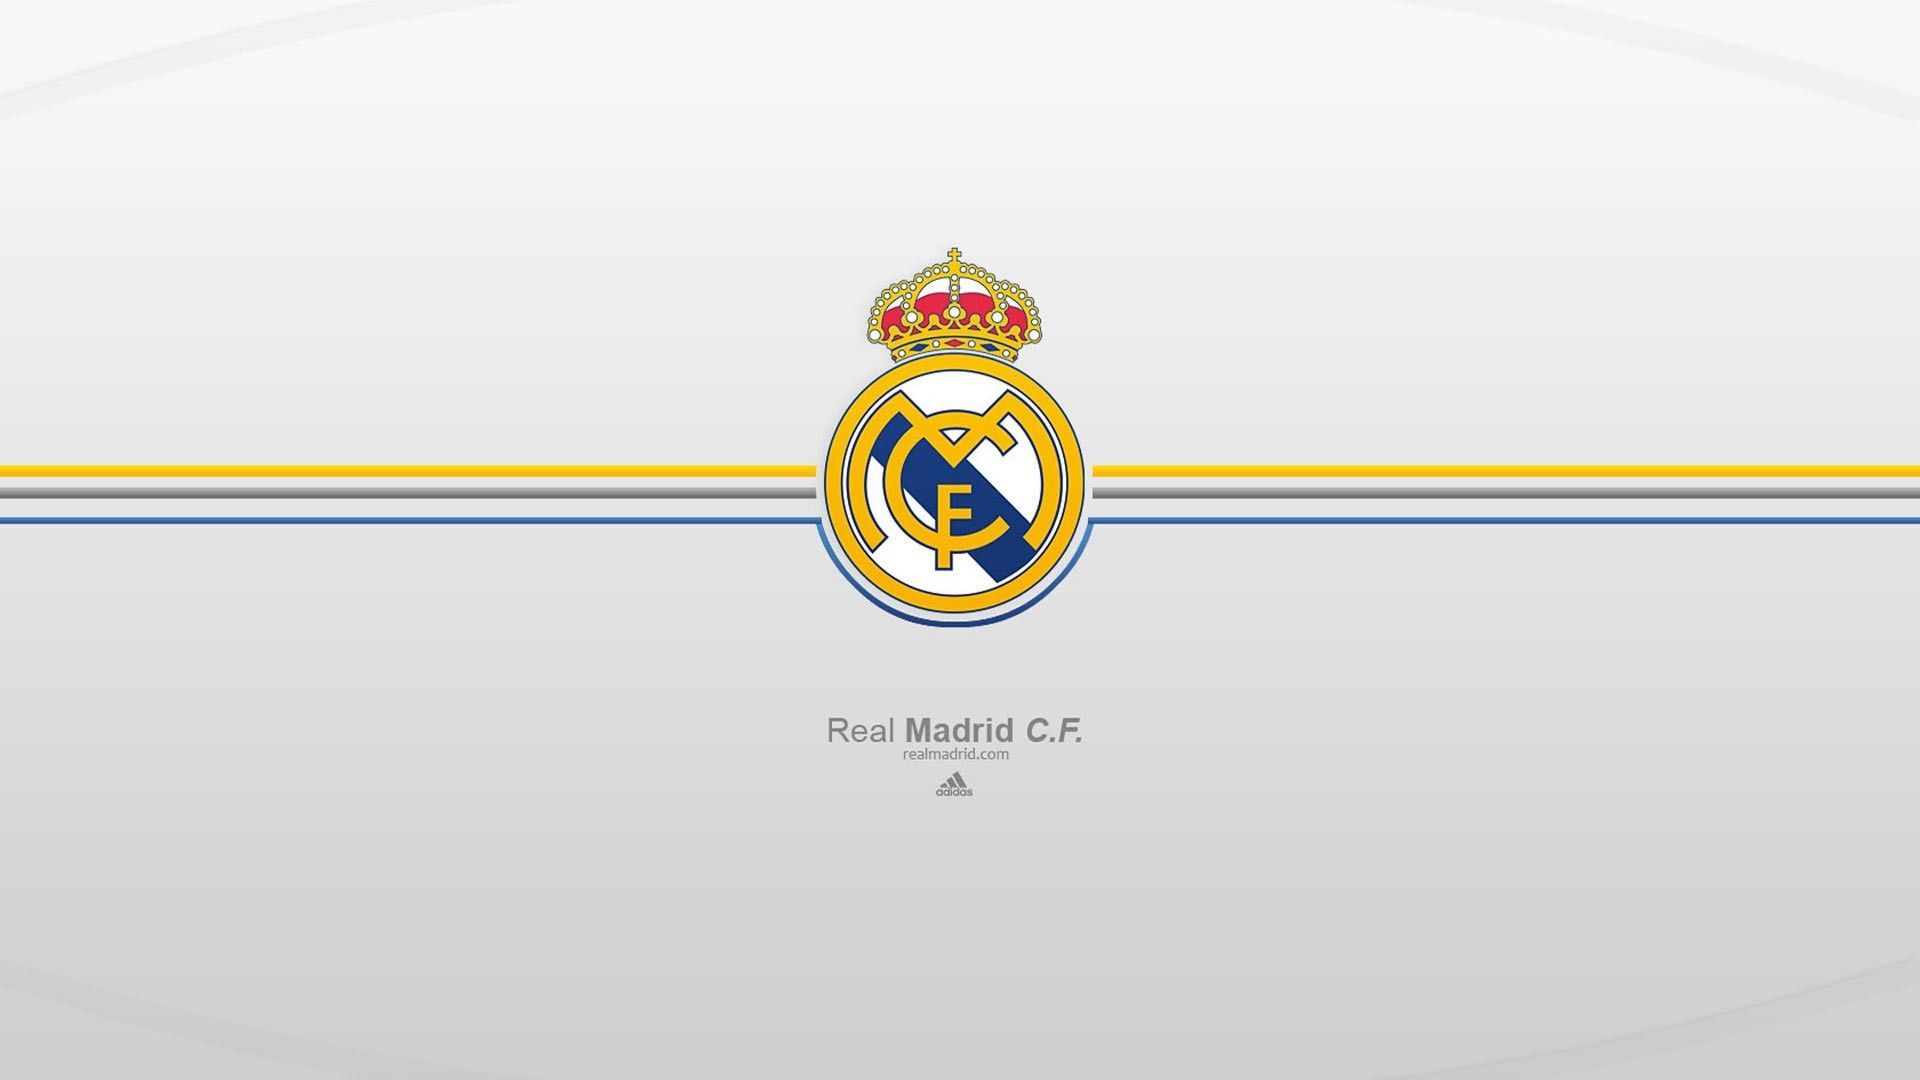 Real Madrid CF Mac Background. Best Wallpaper HD. Real madrid wallpaper, Real madrid logo wallpaper, Madrid wallpaper